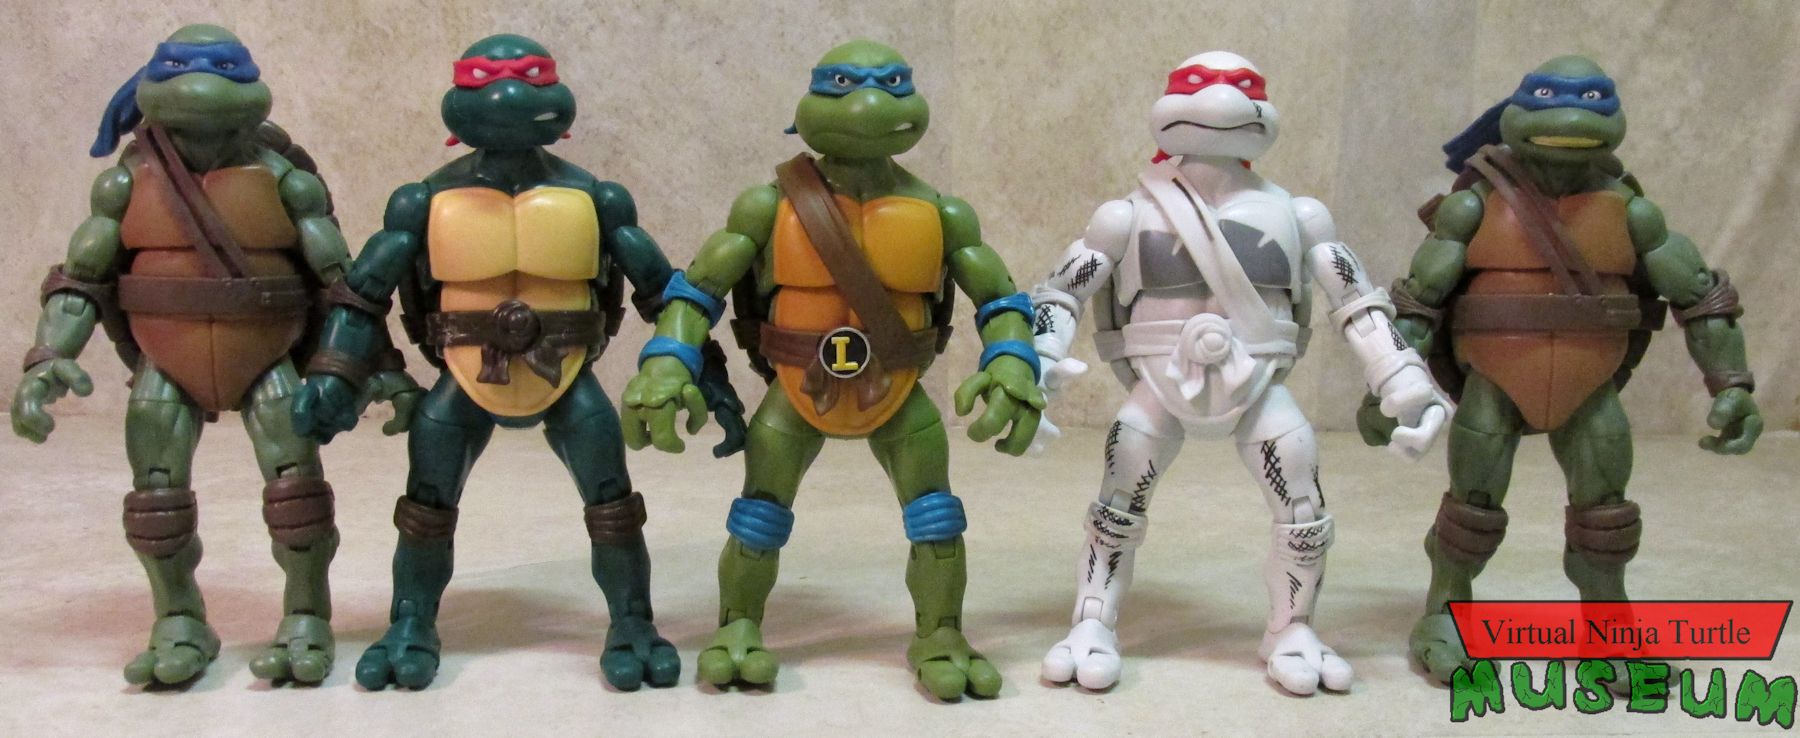 Classic Collection Donatello figures